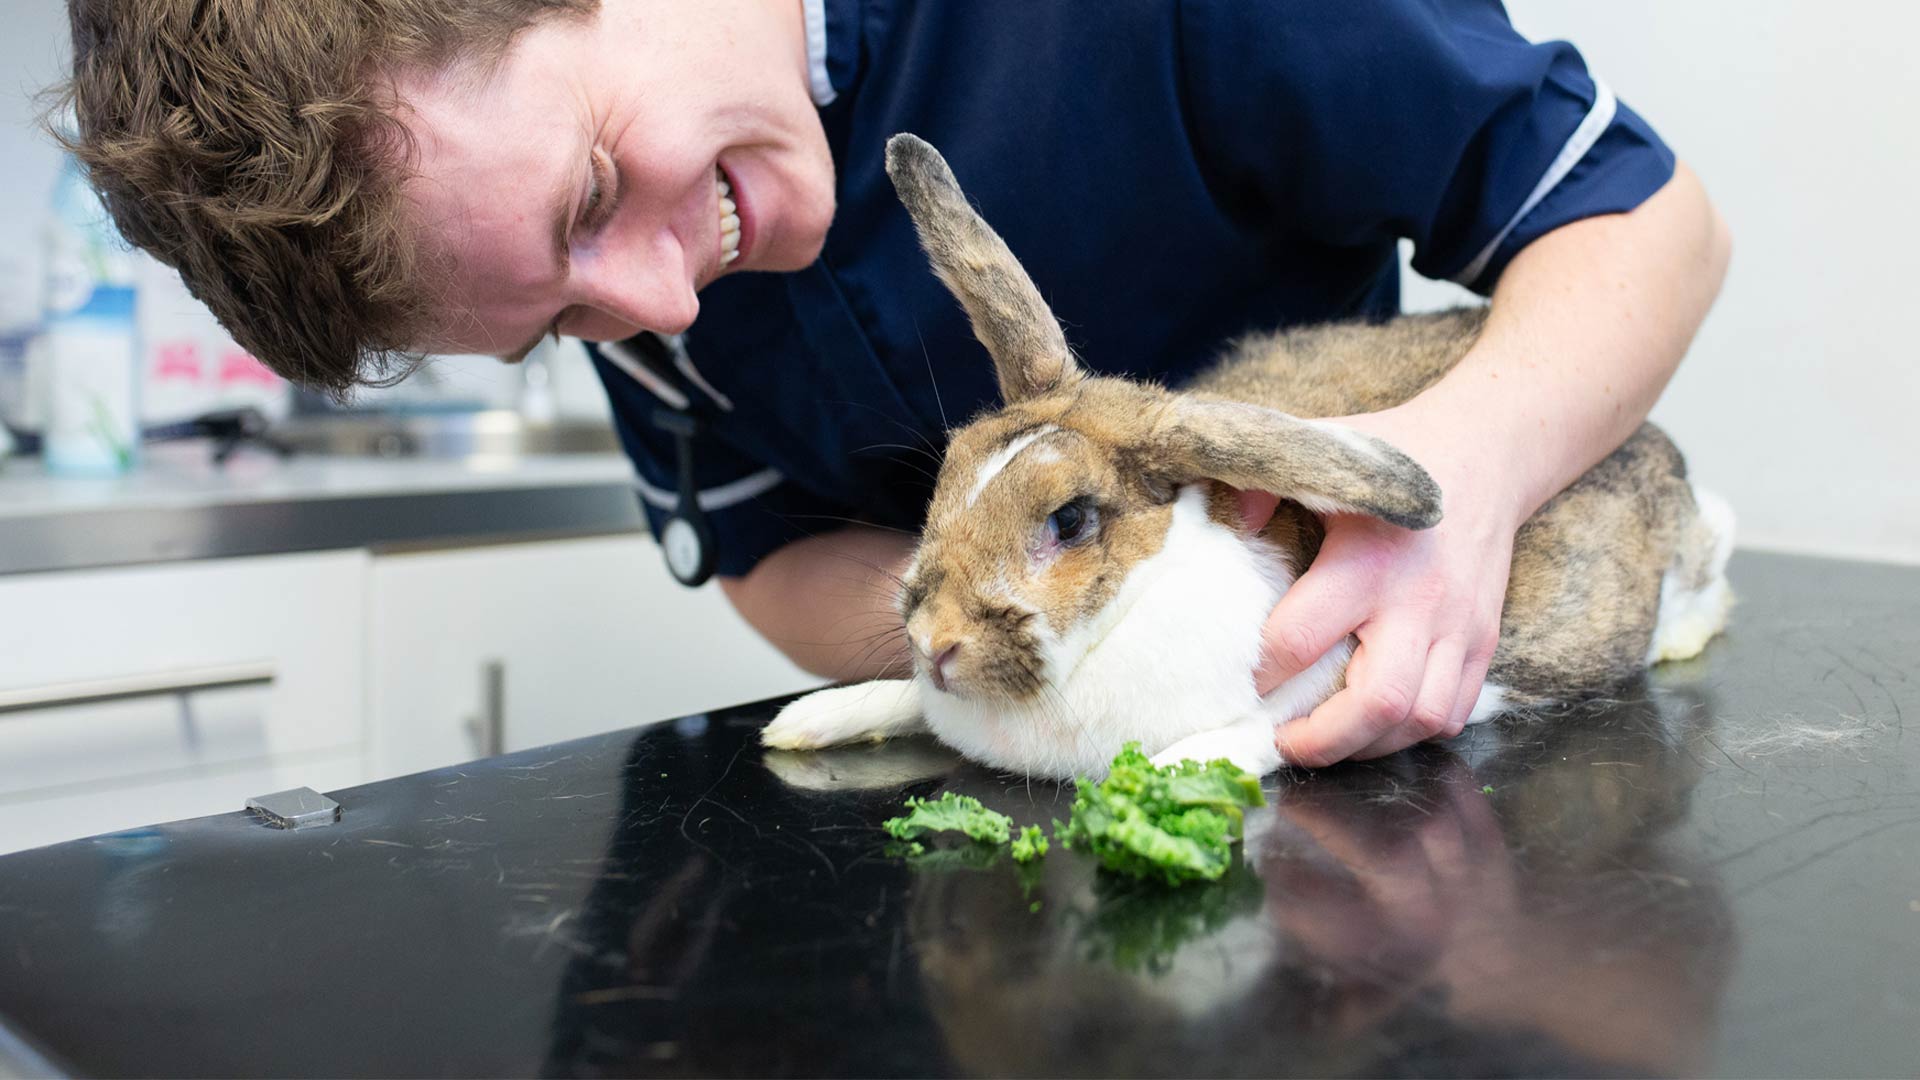 rabbit-care-advice-rabbit-vaccines-rabbit-health-clent-hills-vets